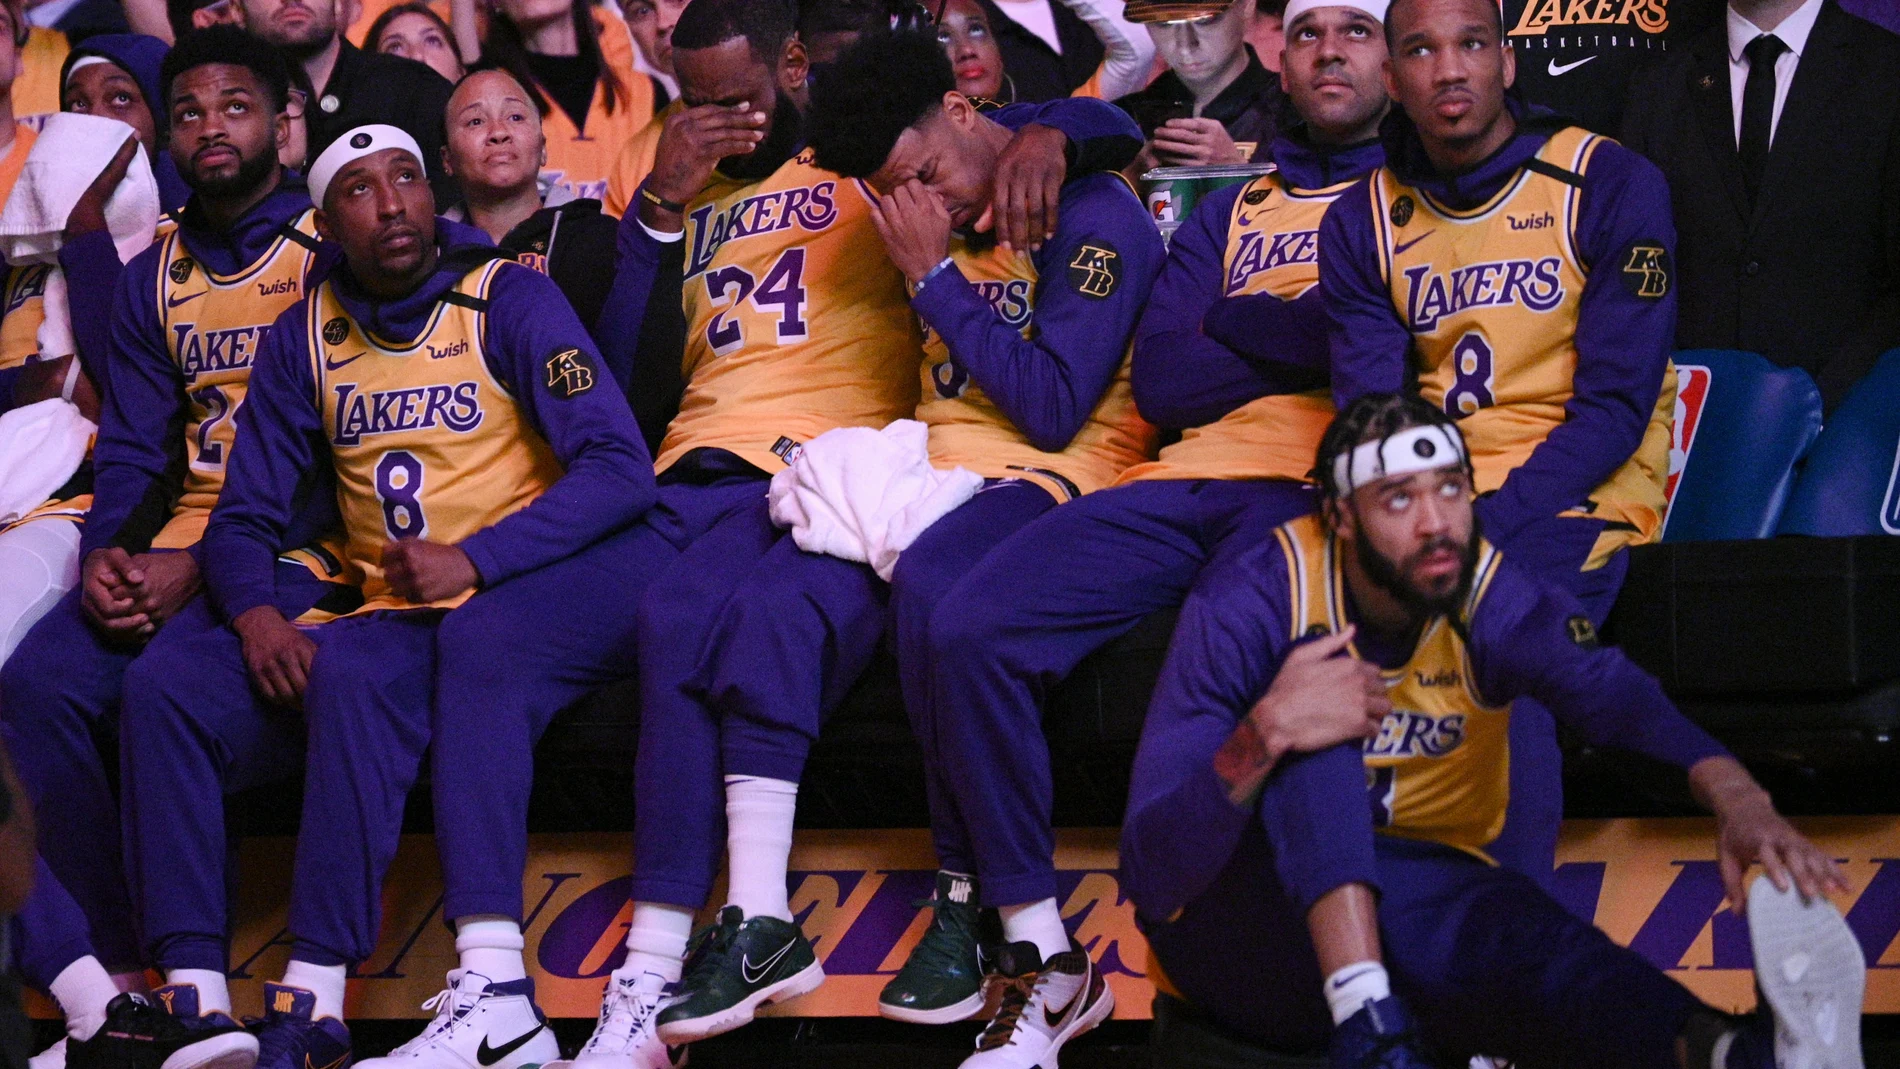 El banquillo de los Lakers observa el videomarcador del Staples en el homenaje a Kobe